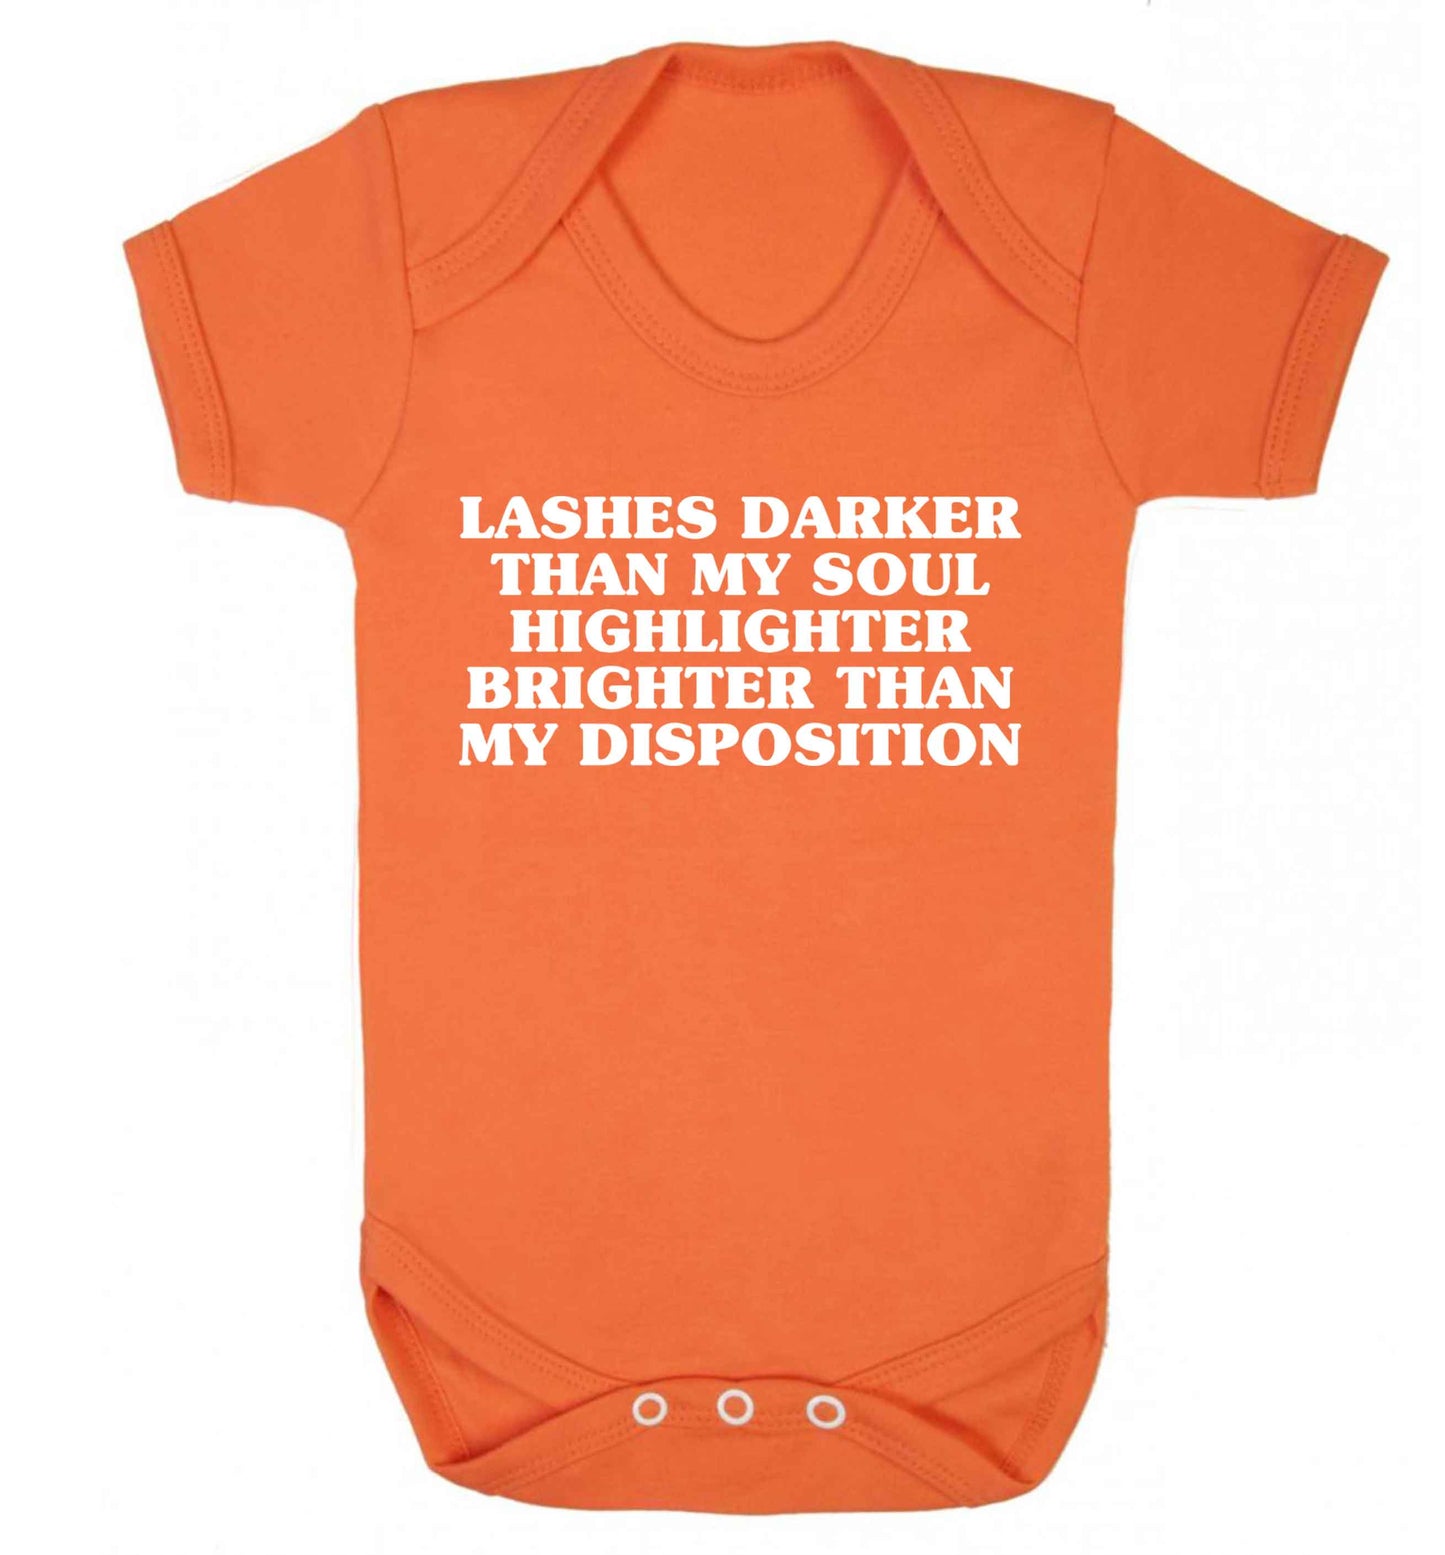 Lashes darker than my soul, highlighter brighter than my disposition Baby Vest orange 18-24 months